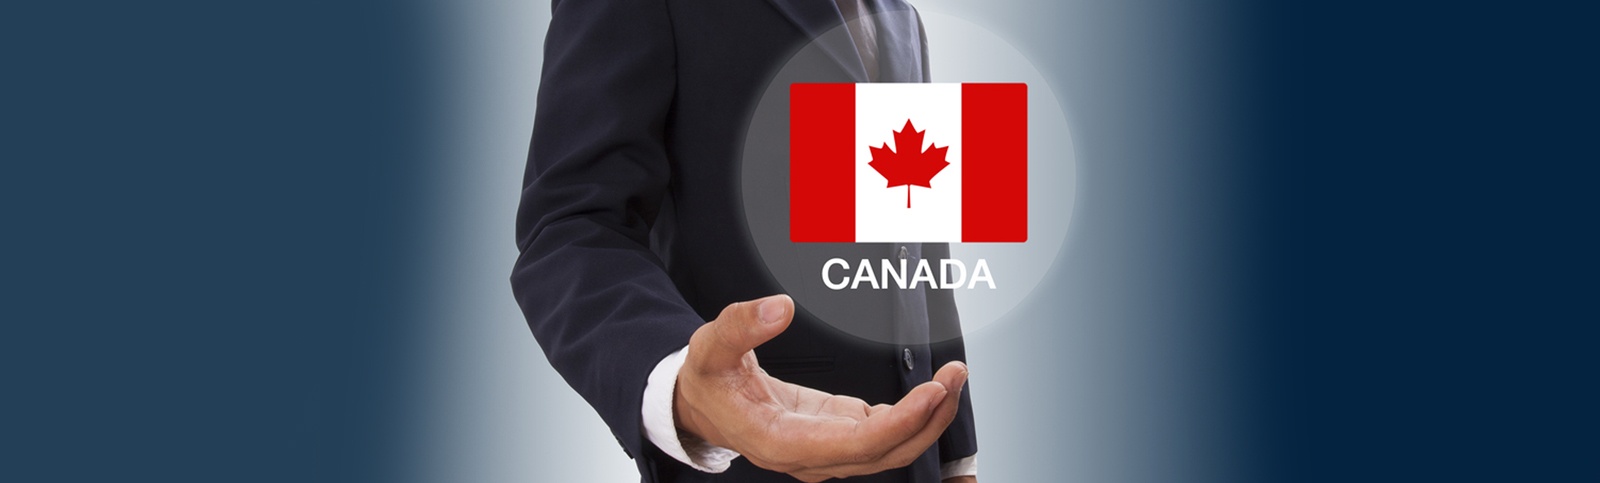 Permanent Resident Card Renewal Canada